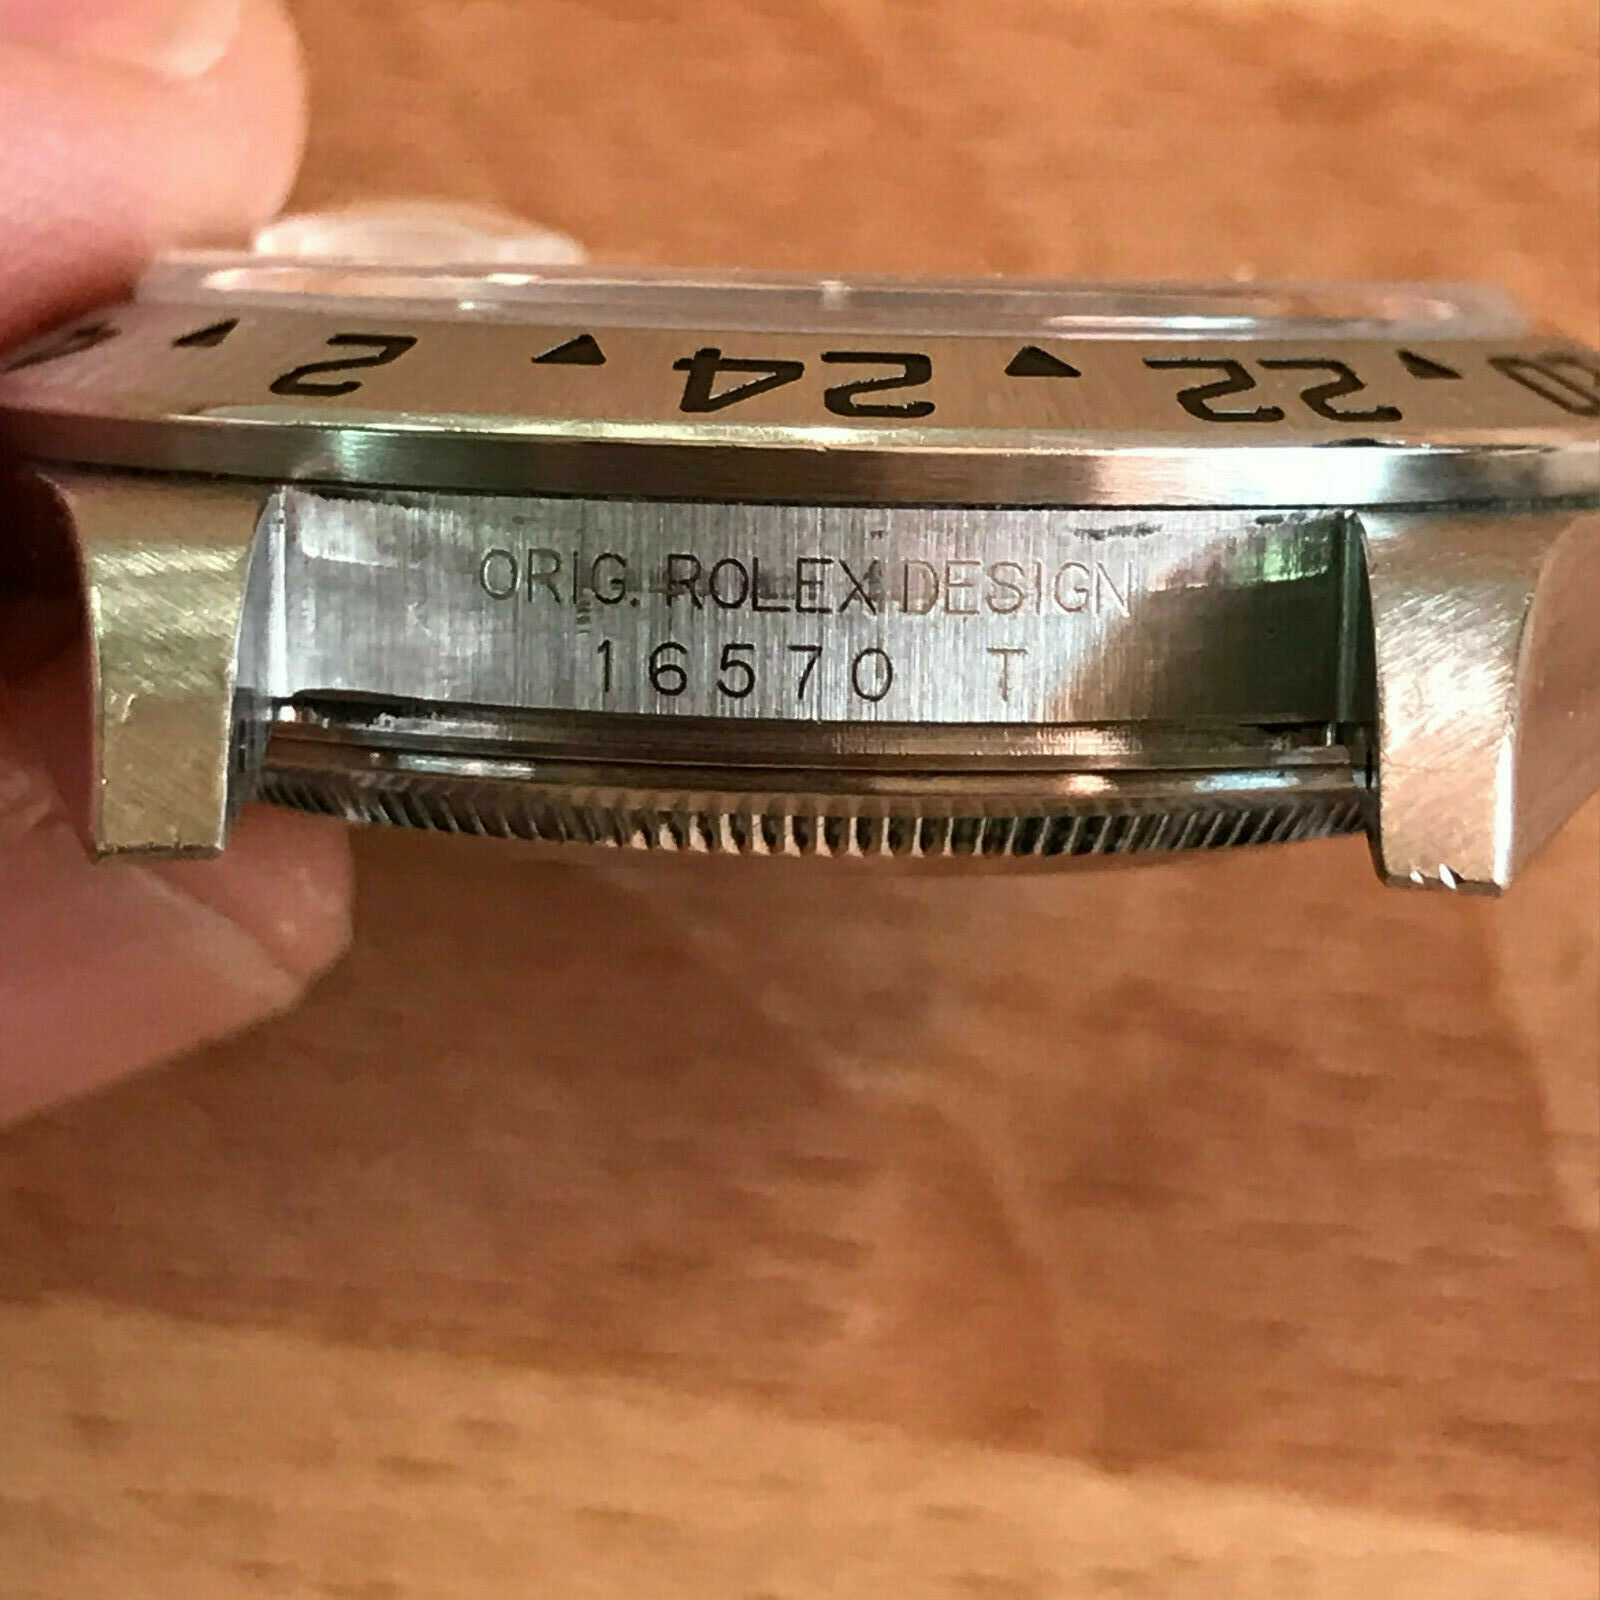 rolex 16570 serial numbers